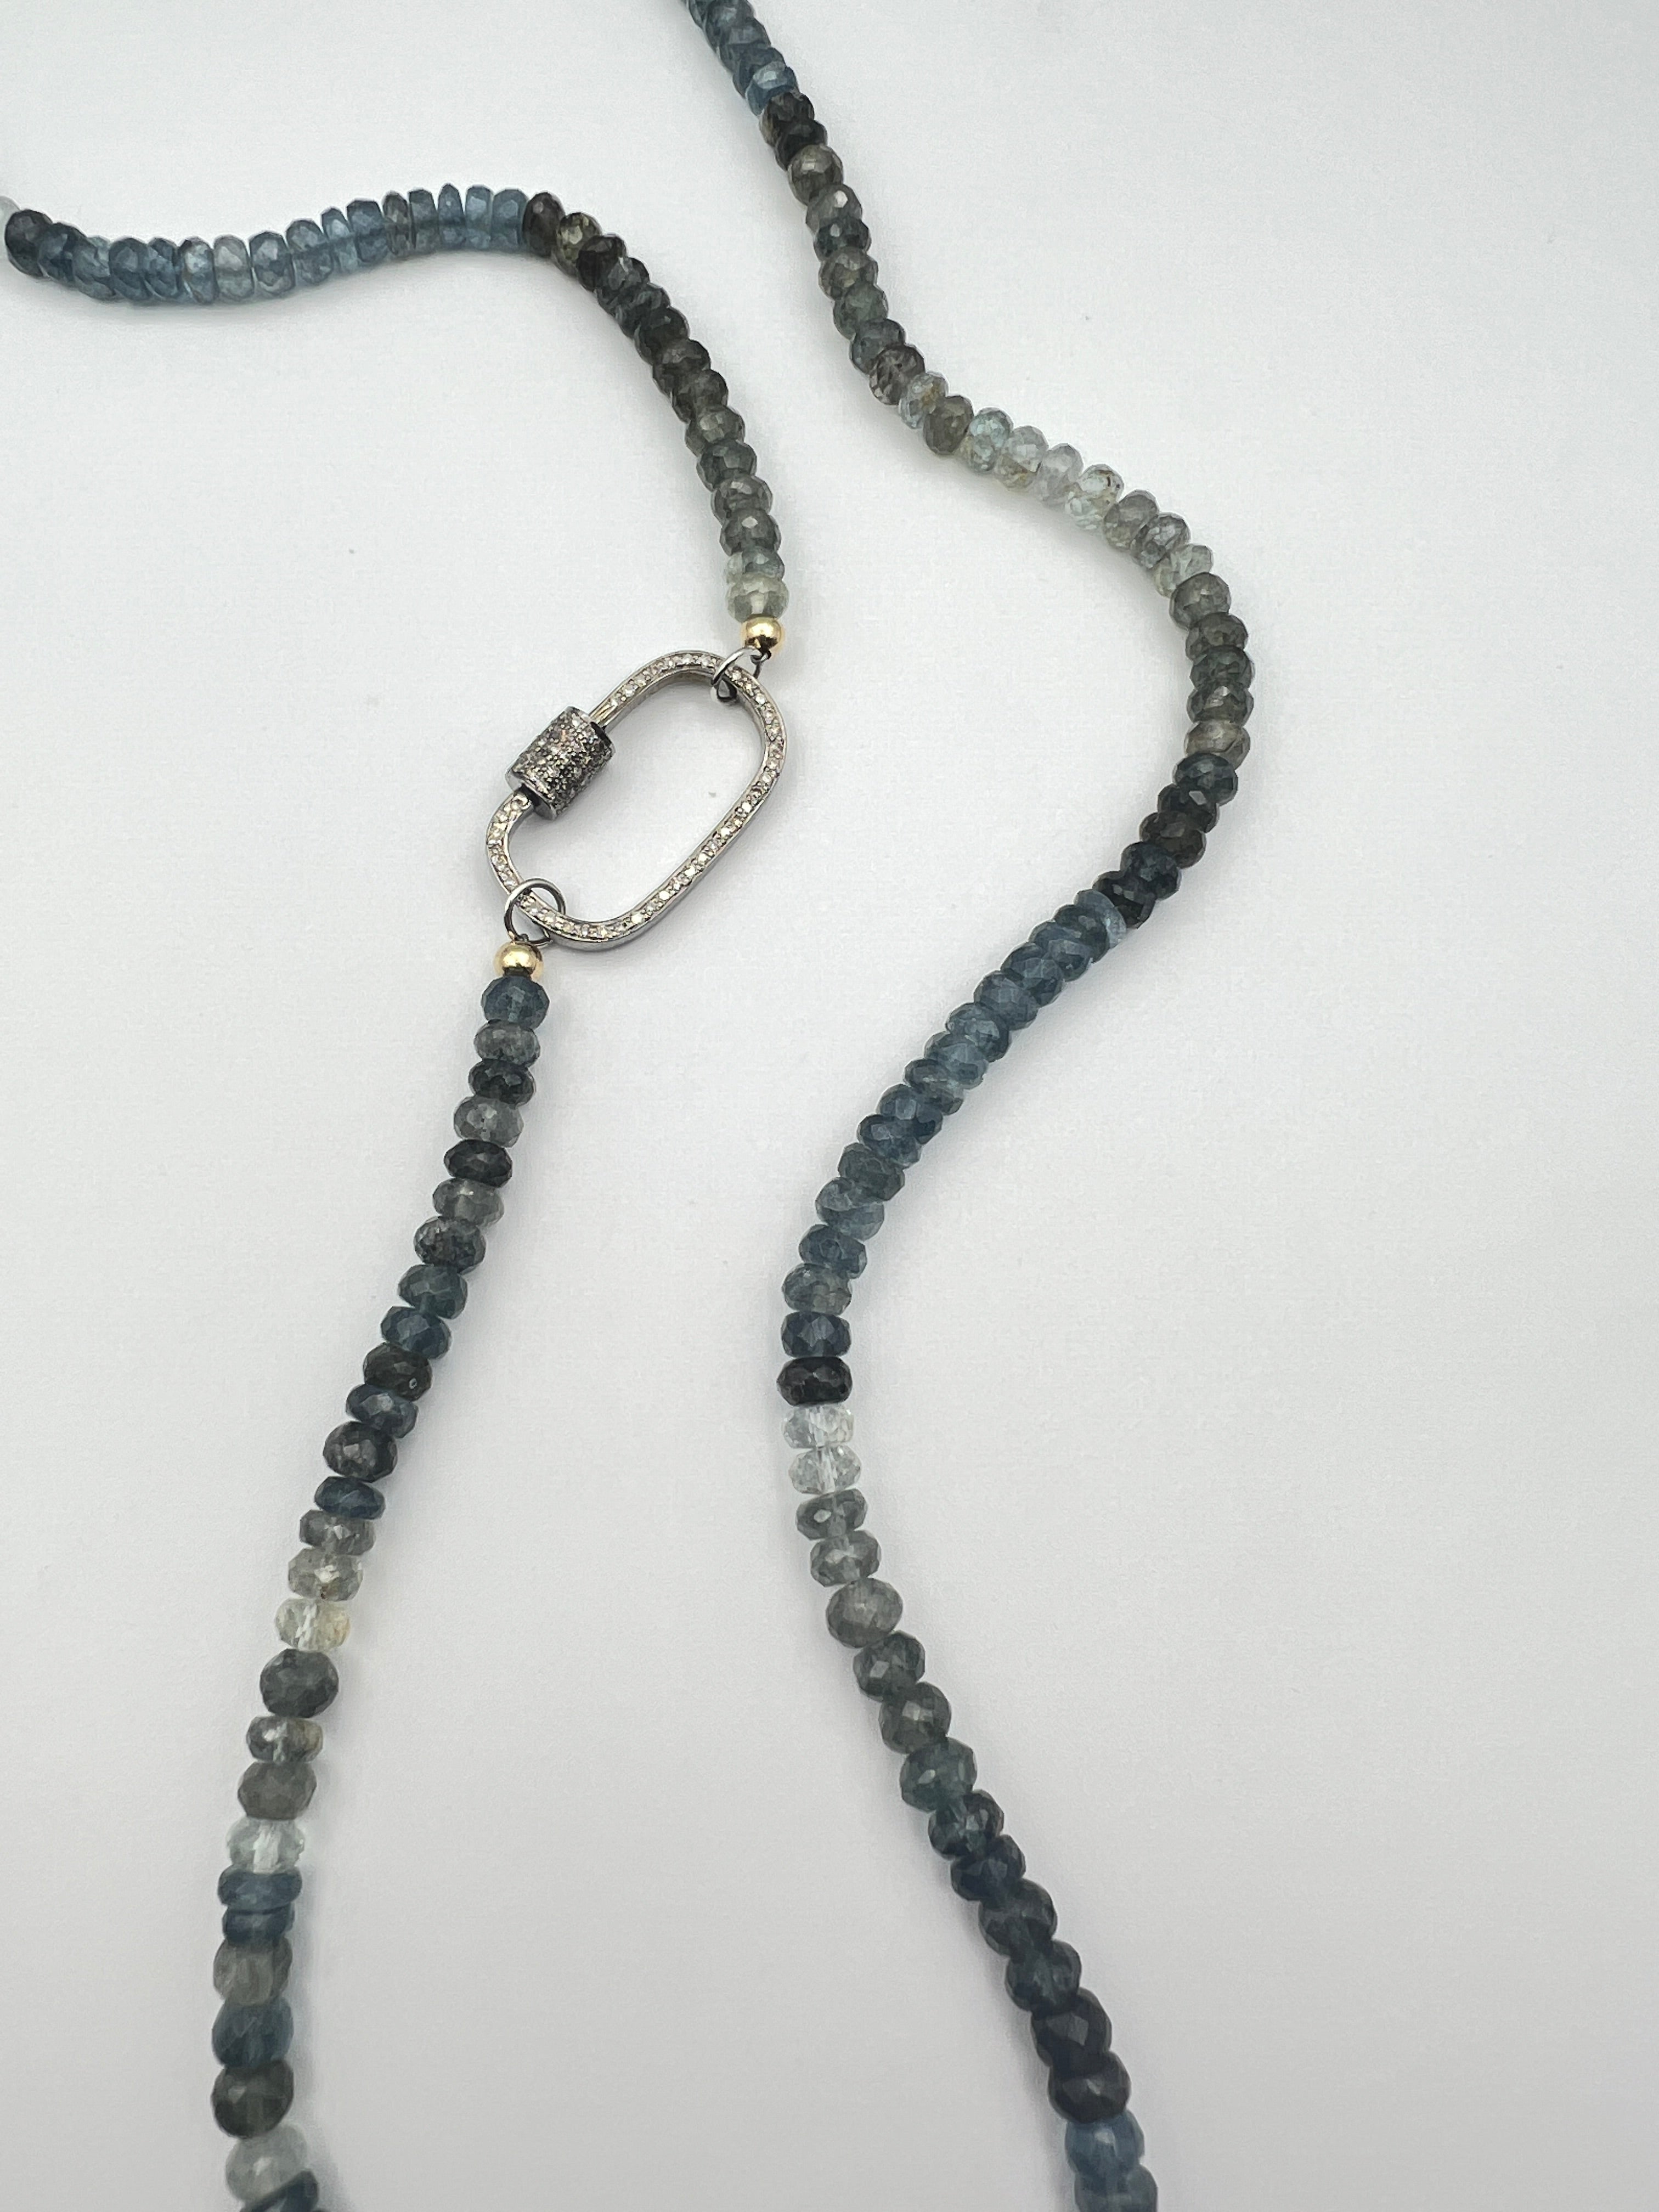 Aquamarine Long Necklace w Diamond Carabiner Clasp